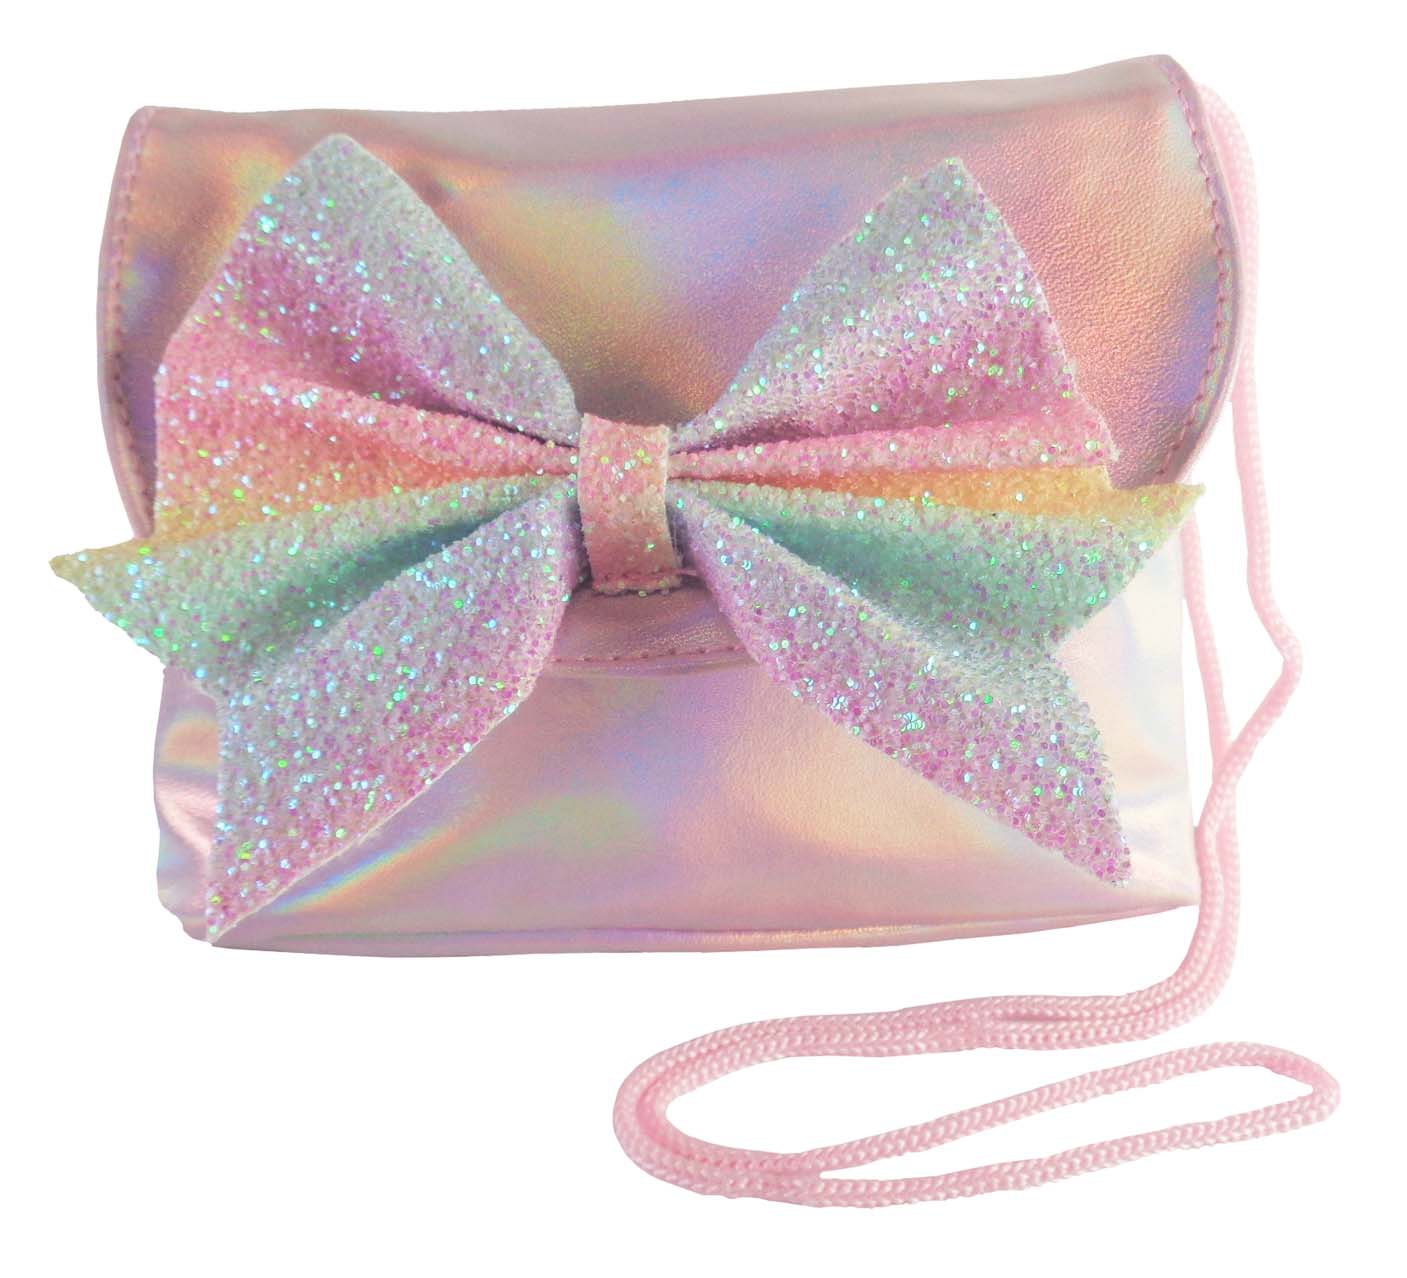 Handbag Matching Bag Set Ballet Pumps Girls Rainbow Glitter Bow Party Shoes